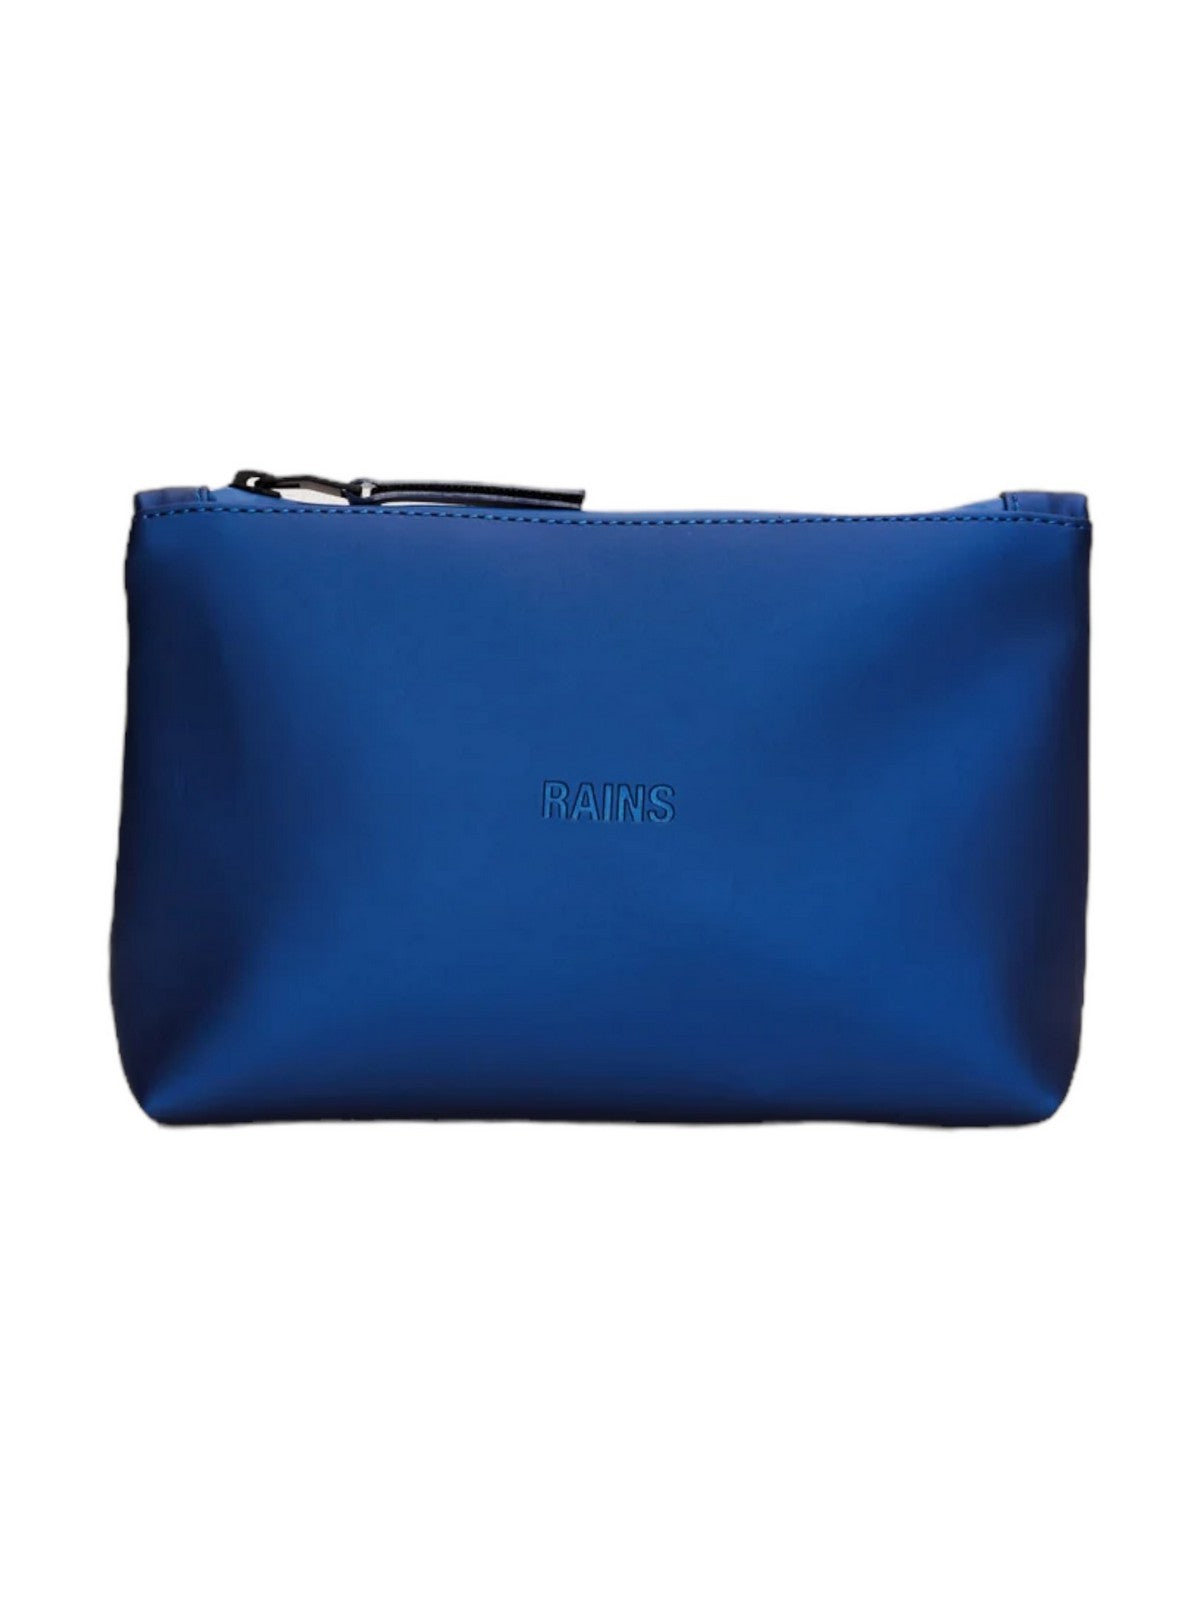 RAINS Pochette Unisex adulto Cosmetic Bag W3 15600 10 Storm Blu